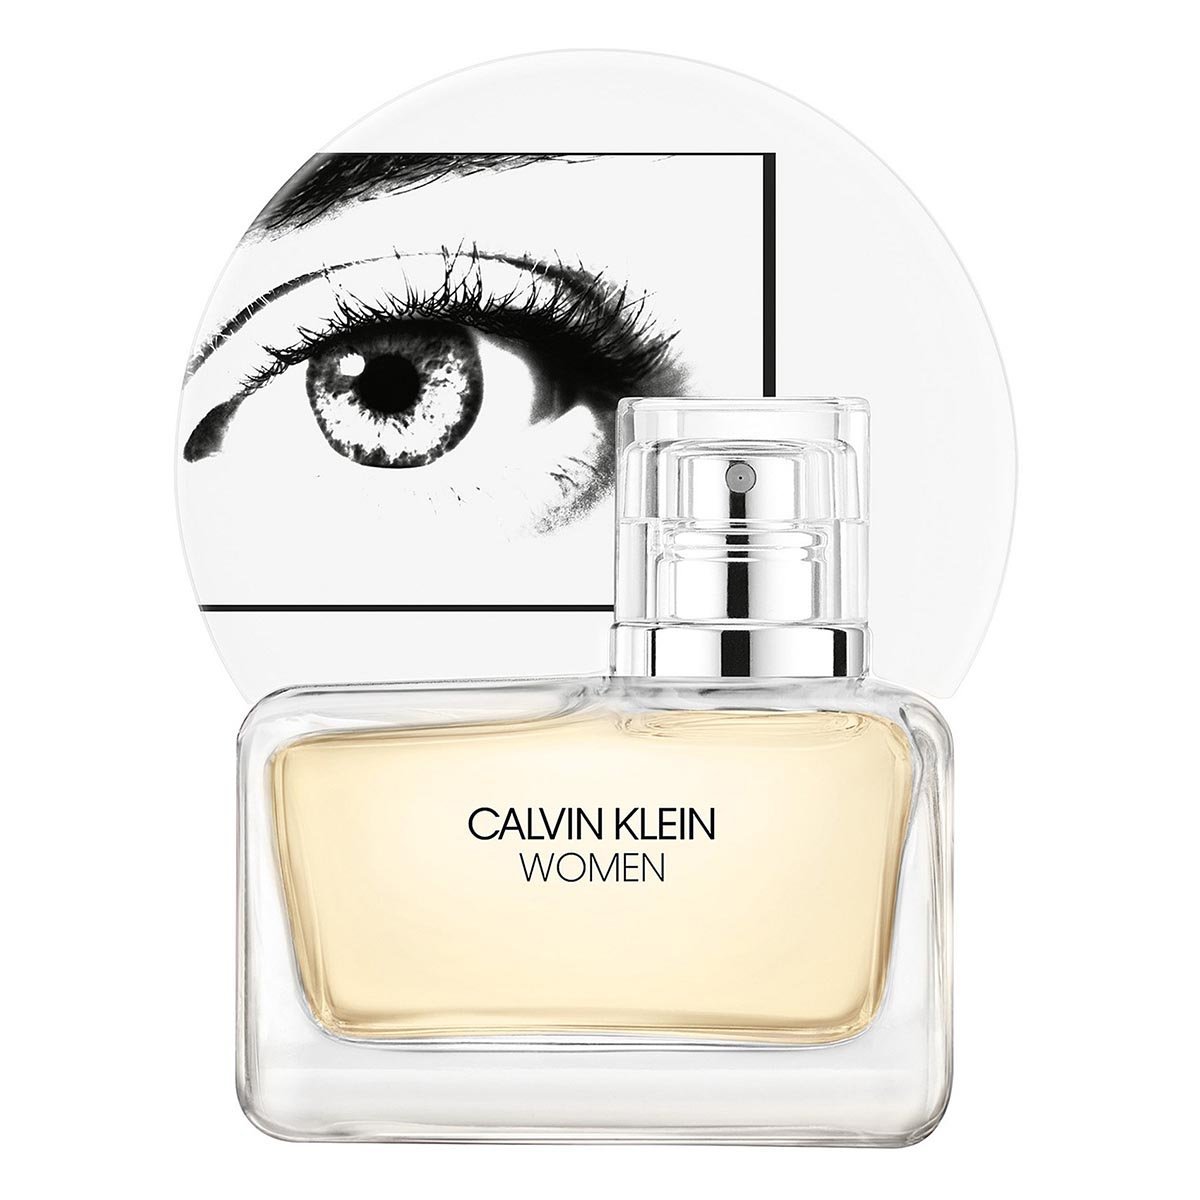 Calvin Klein Women EDT - My Perfume Shop Australia